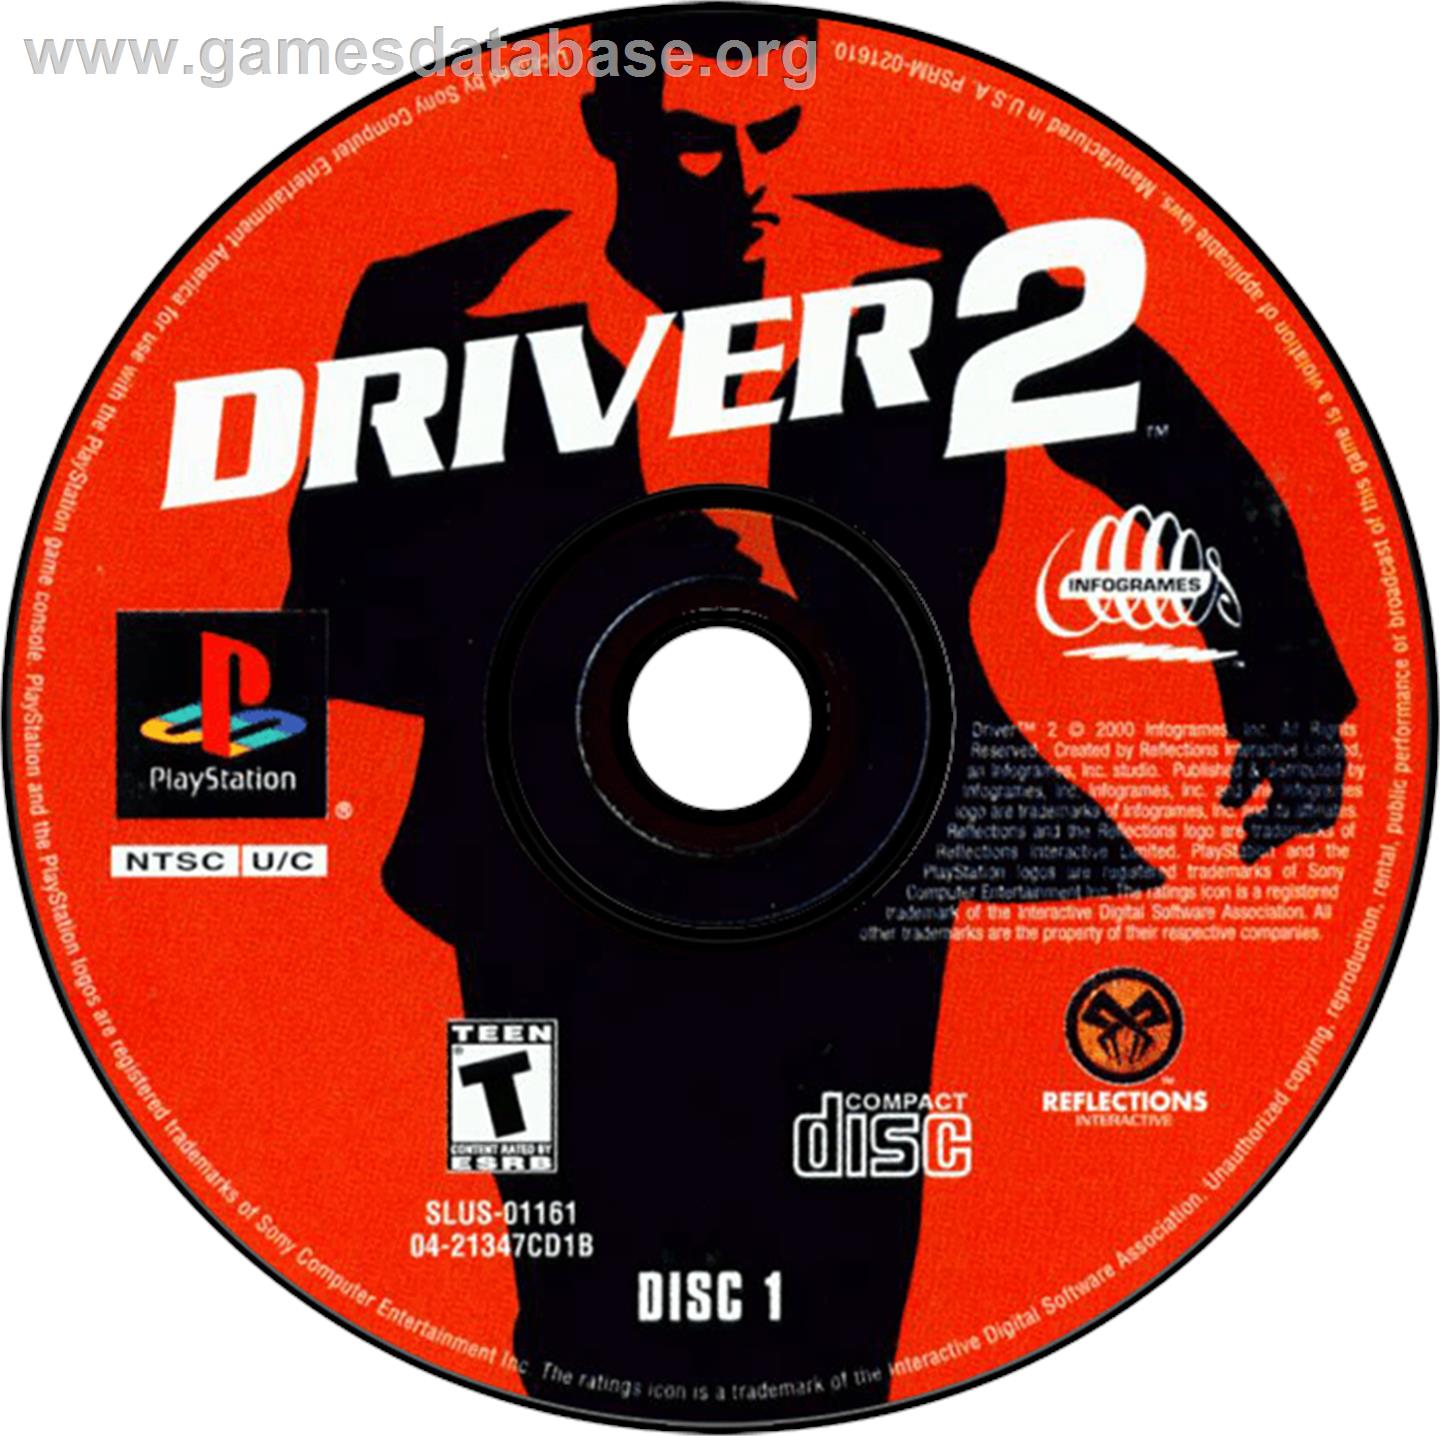 Driver 2 - Sony Playstation - Artwork - Disc